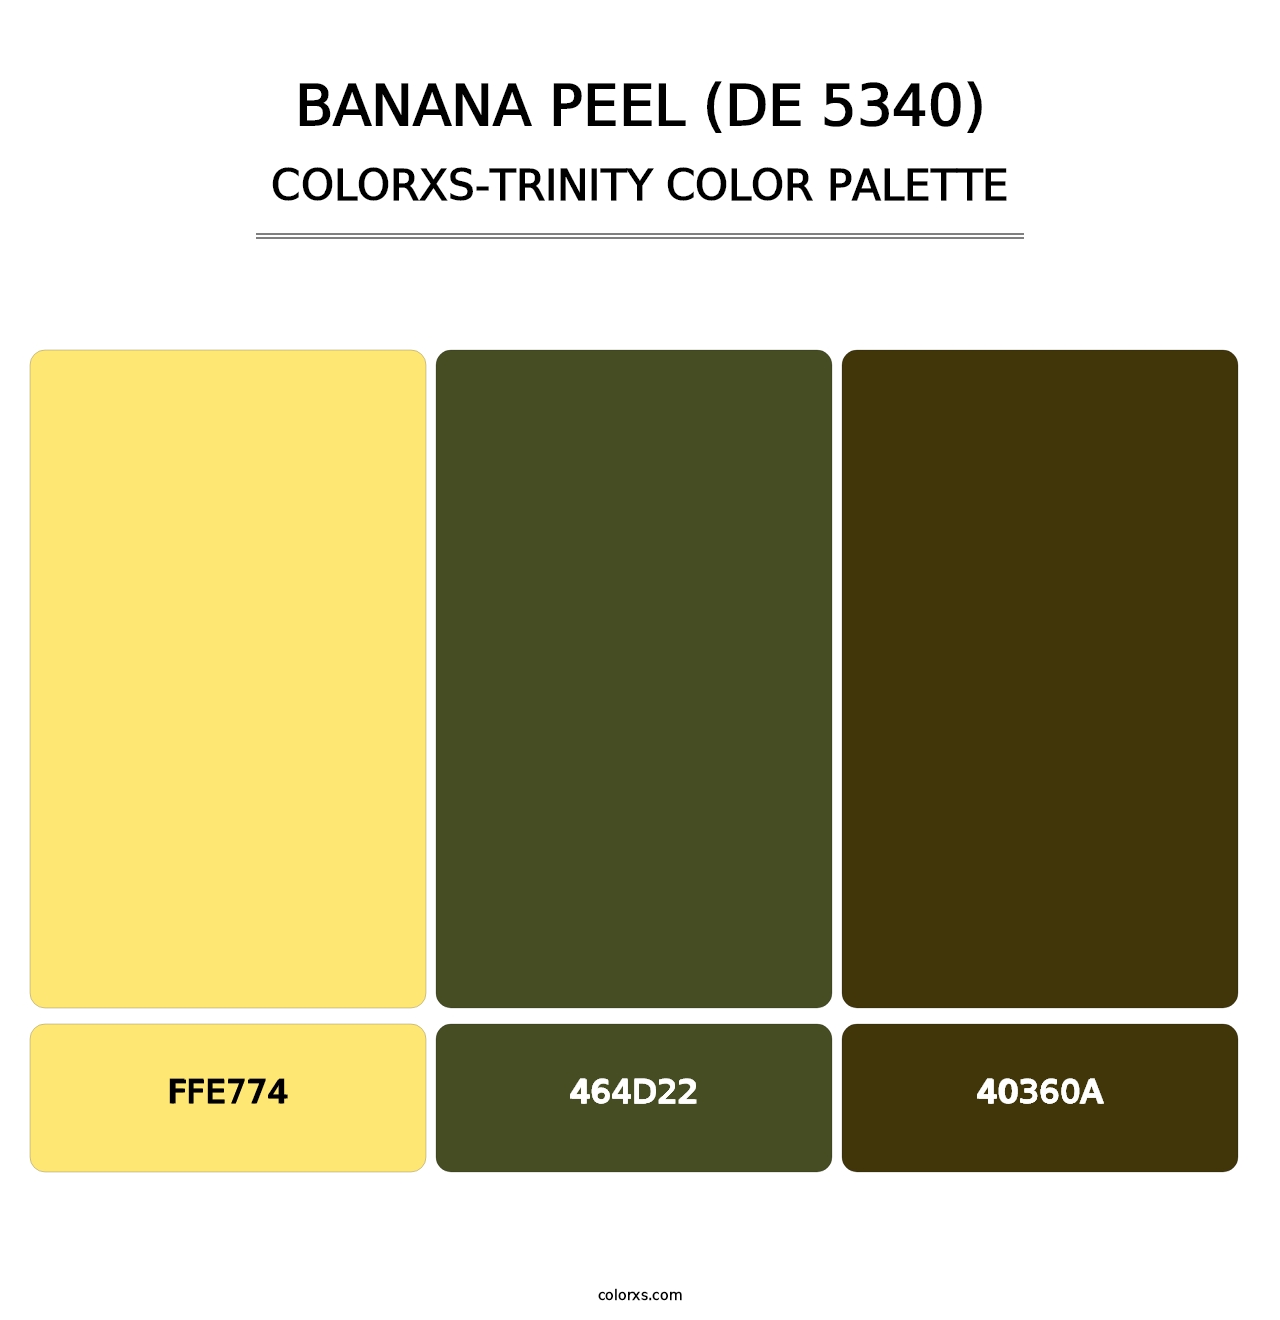 Banana Peel (DE 5340) - Colorxs Trinity Palette